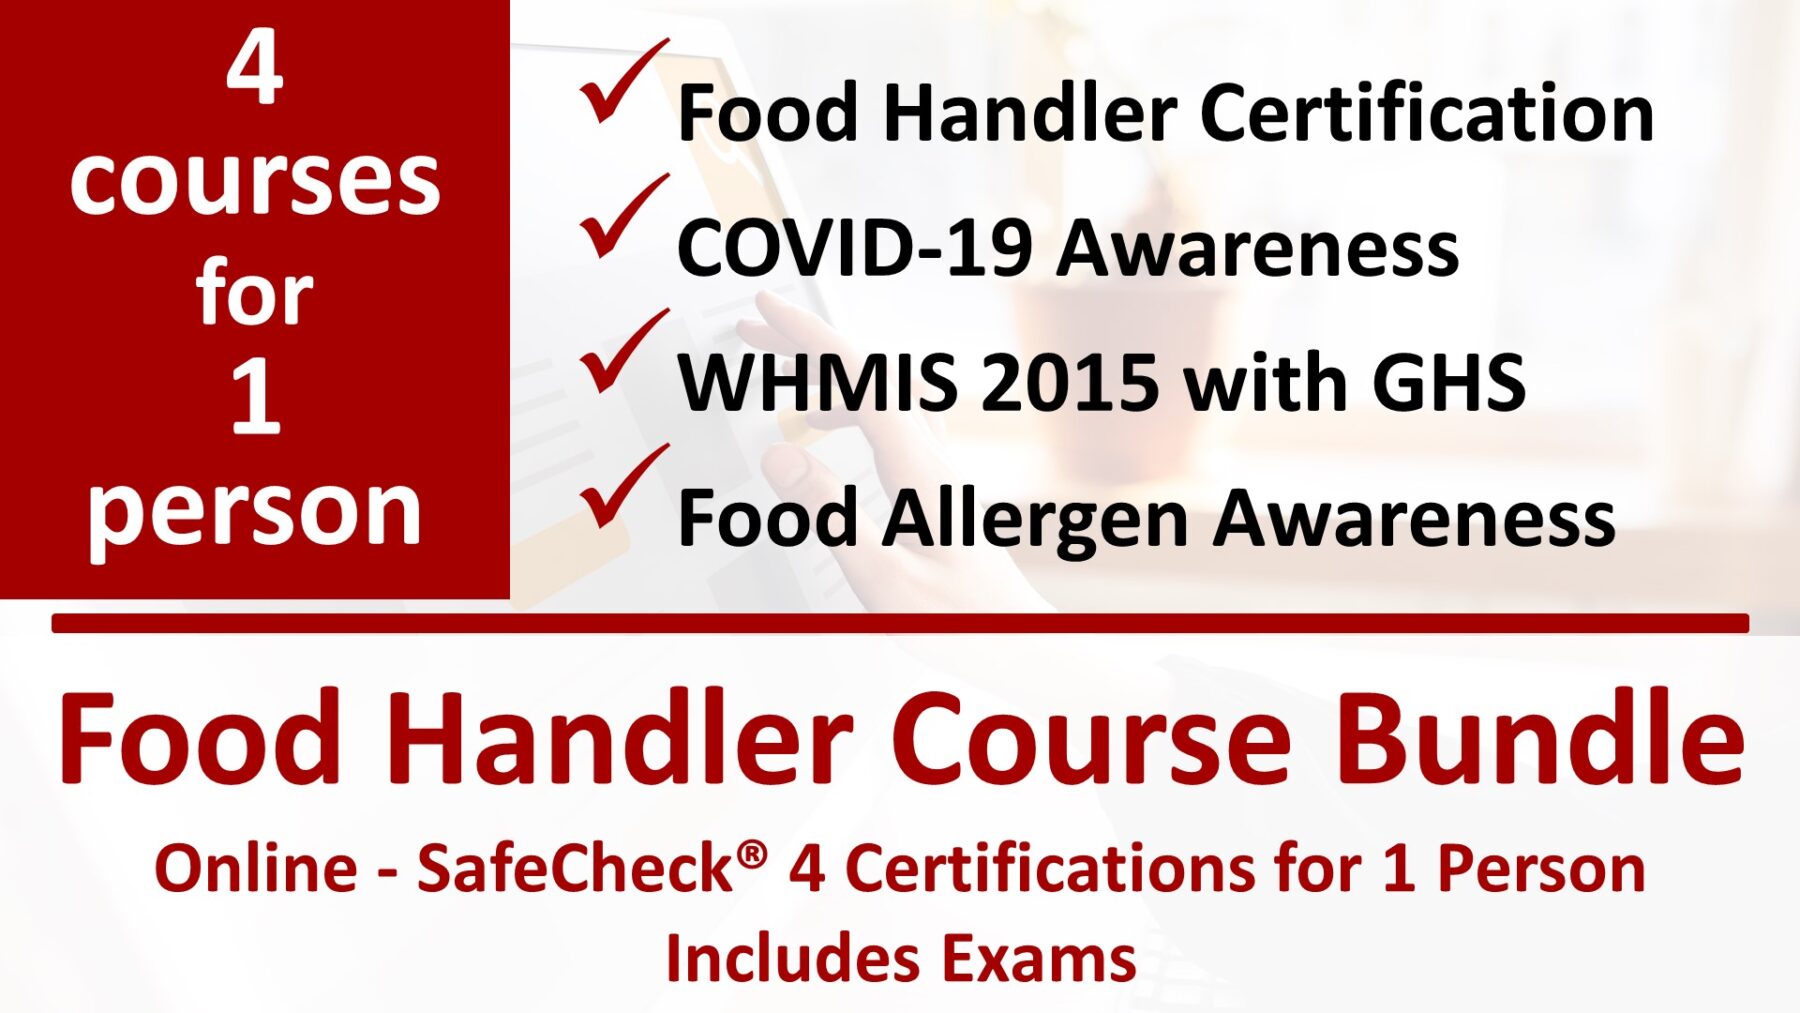 SafeCheck Food Handler Course Bundle for 1 Person